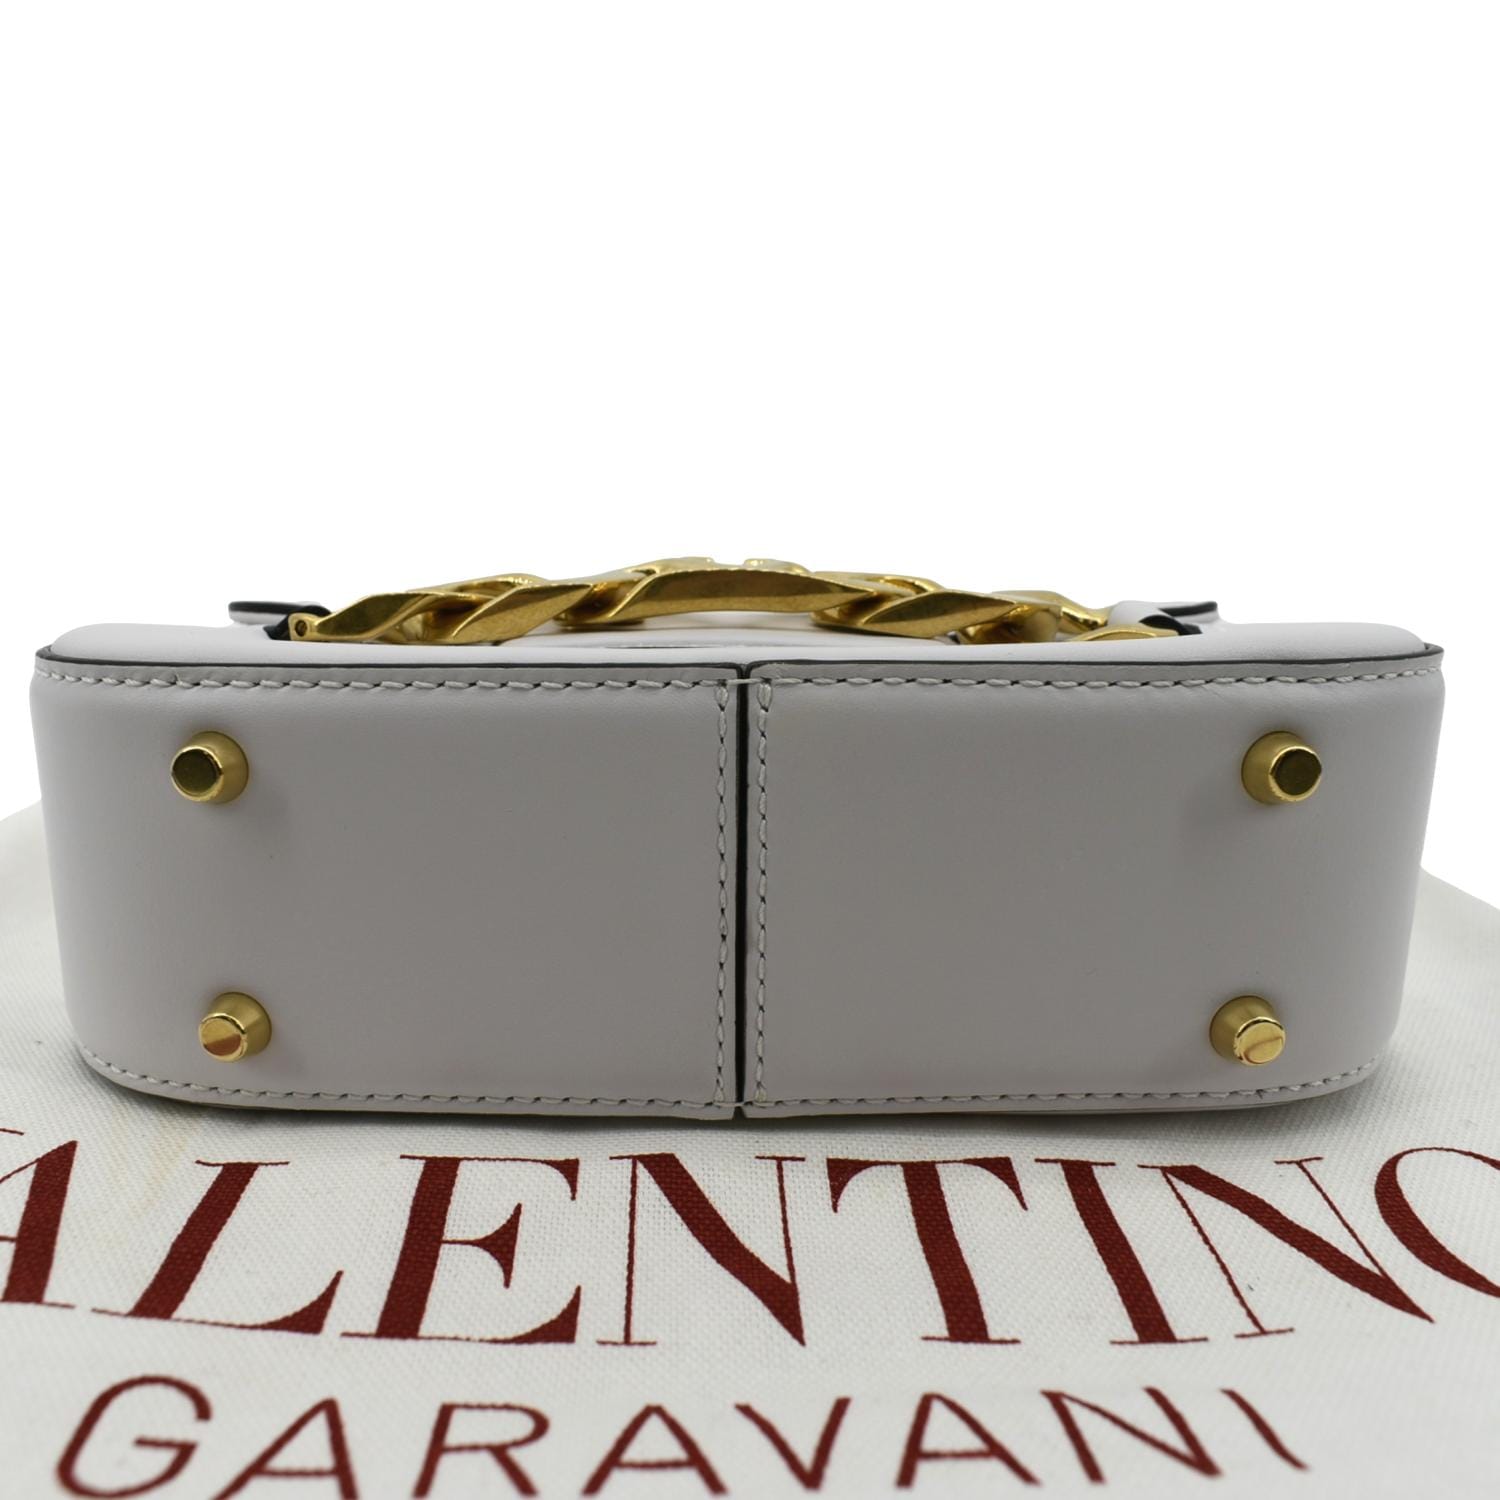 Green V-Logo leather cross-body wallet bag, Valentino Garavani